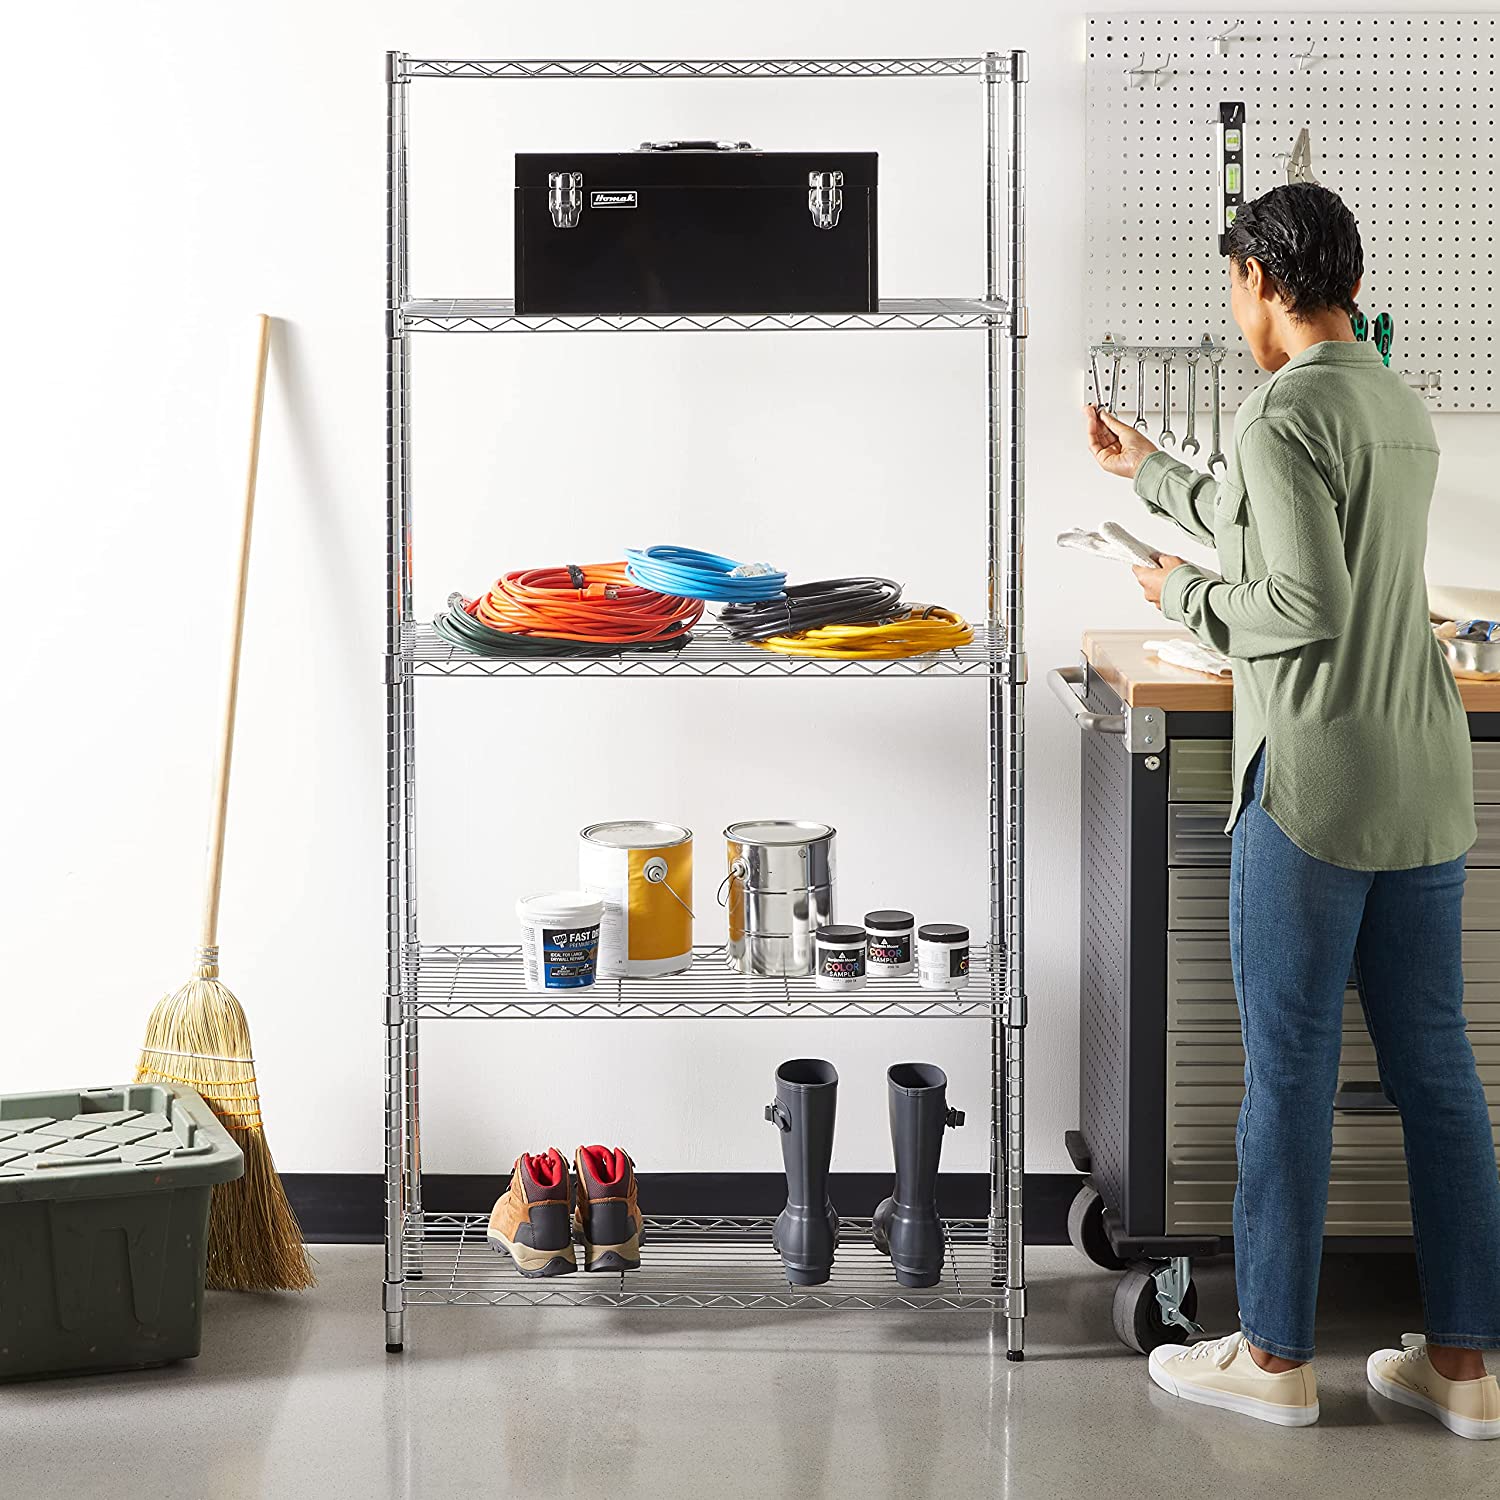 Amazon Basics 5-Shelf Adjustable, versatile pantry wire shelving for optimal organization